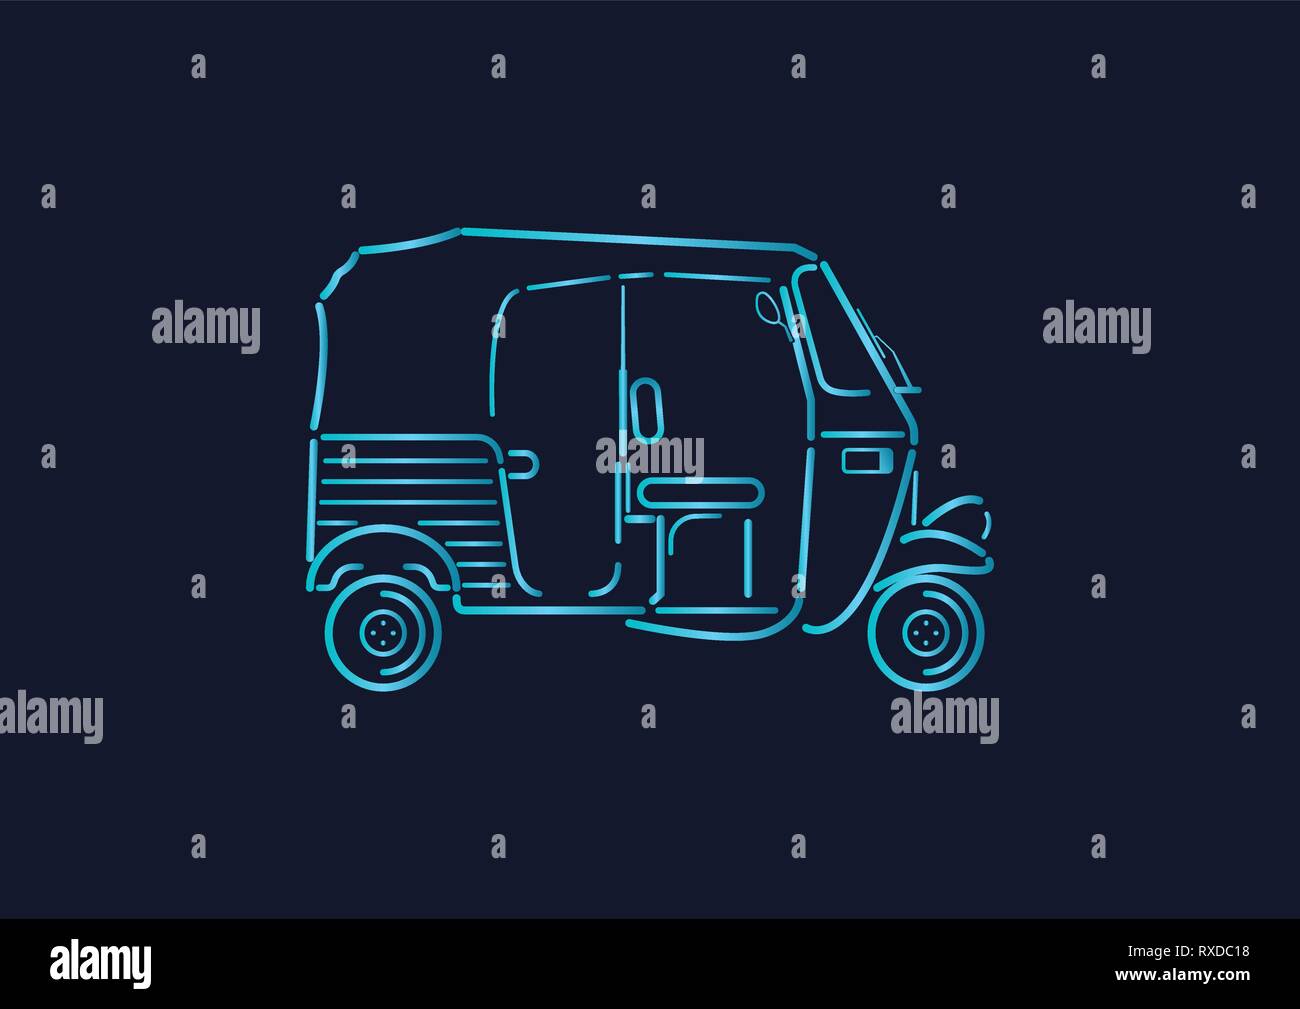 Auto rickshaw illustration Stock Vector